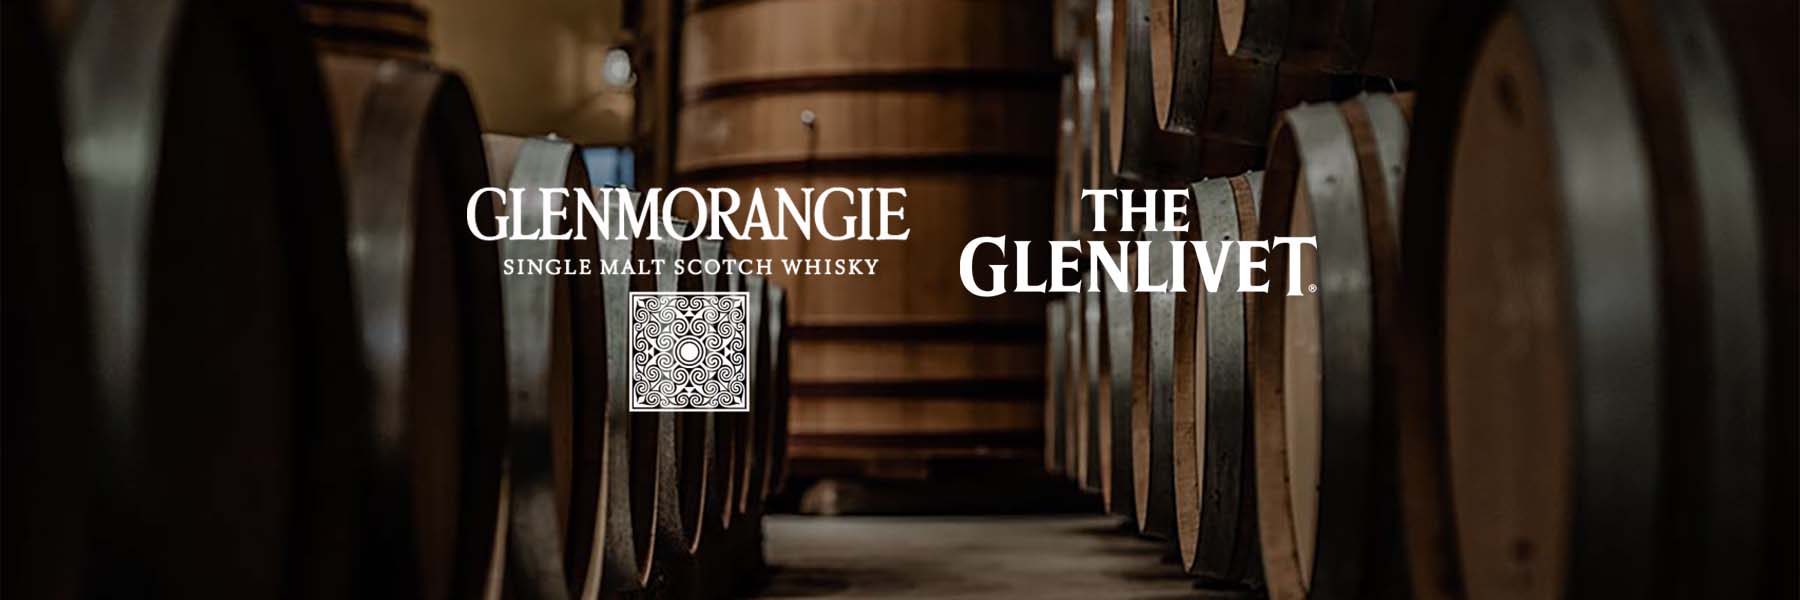 Glenmorangie vs Glenlivet | A comparison of two legendary whisky producers